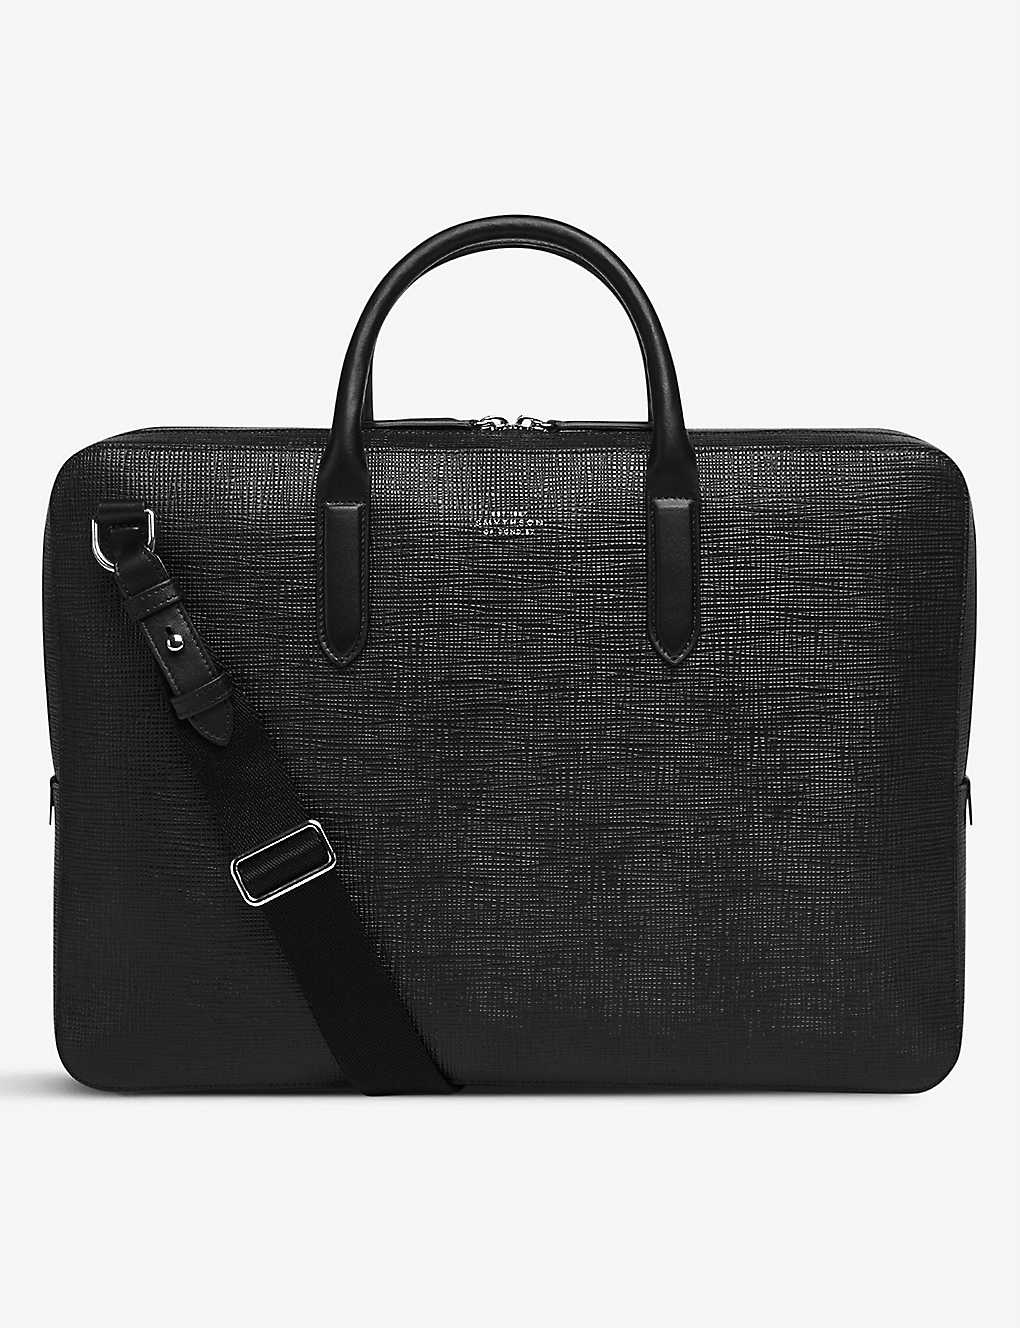 Panama large leather briefcase - 1